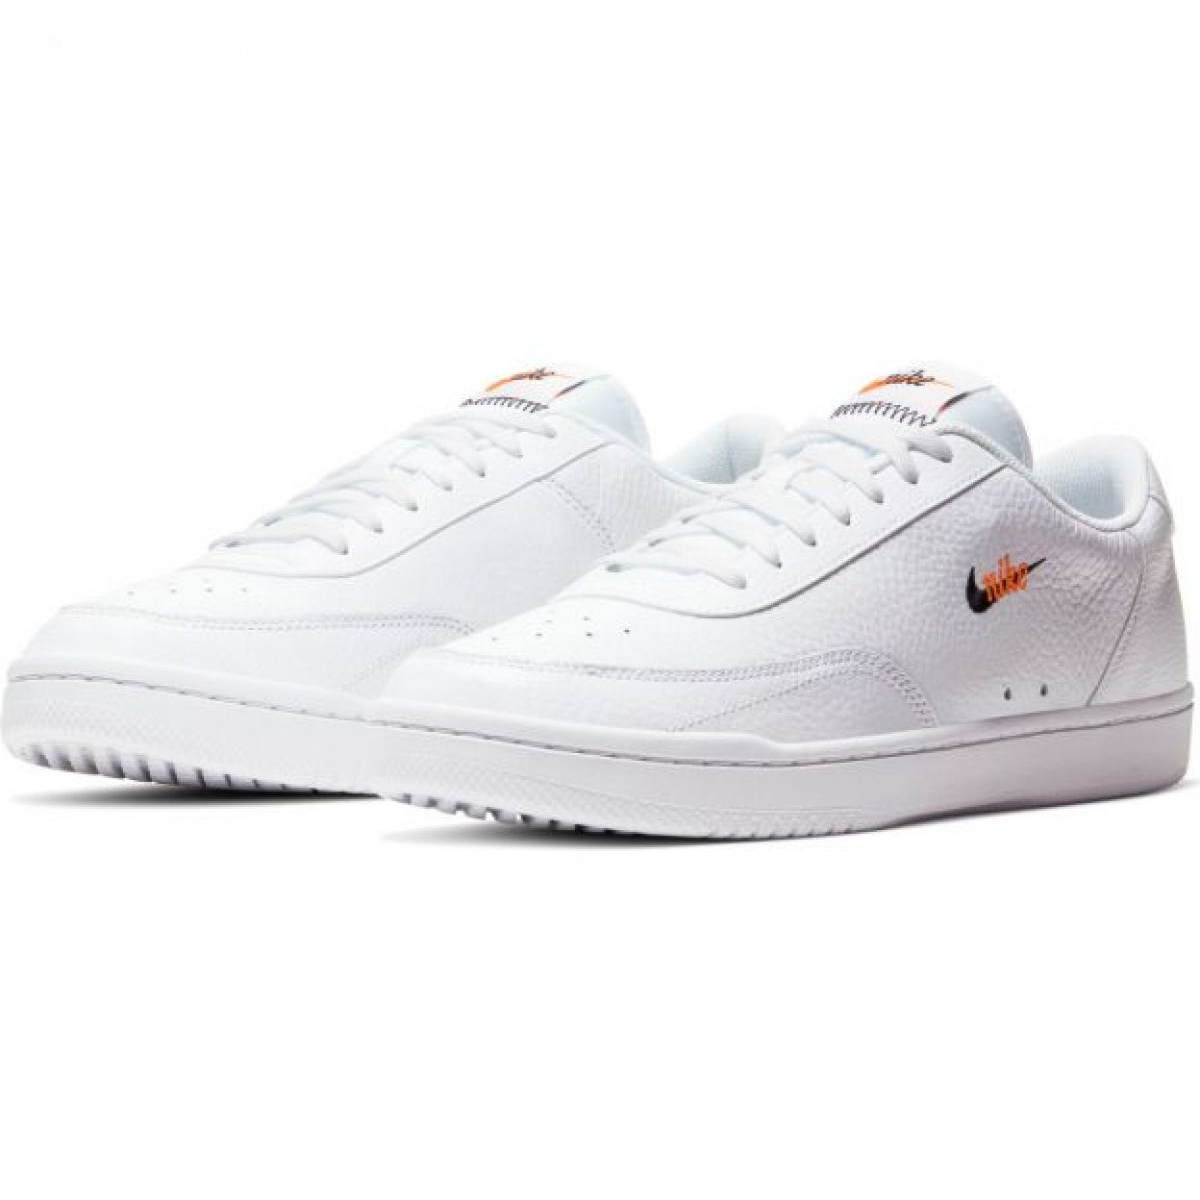 Buty Nike Court Vintage Prem M CT1726-100 białe